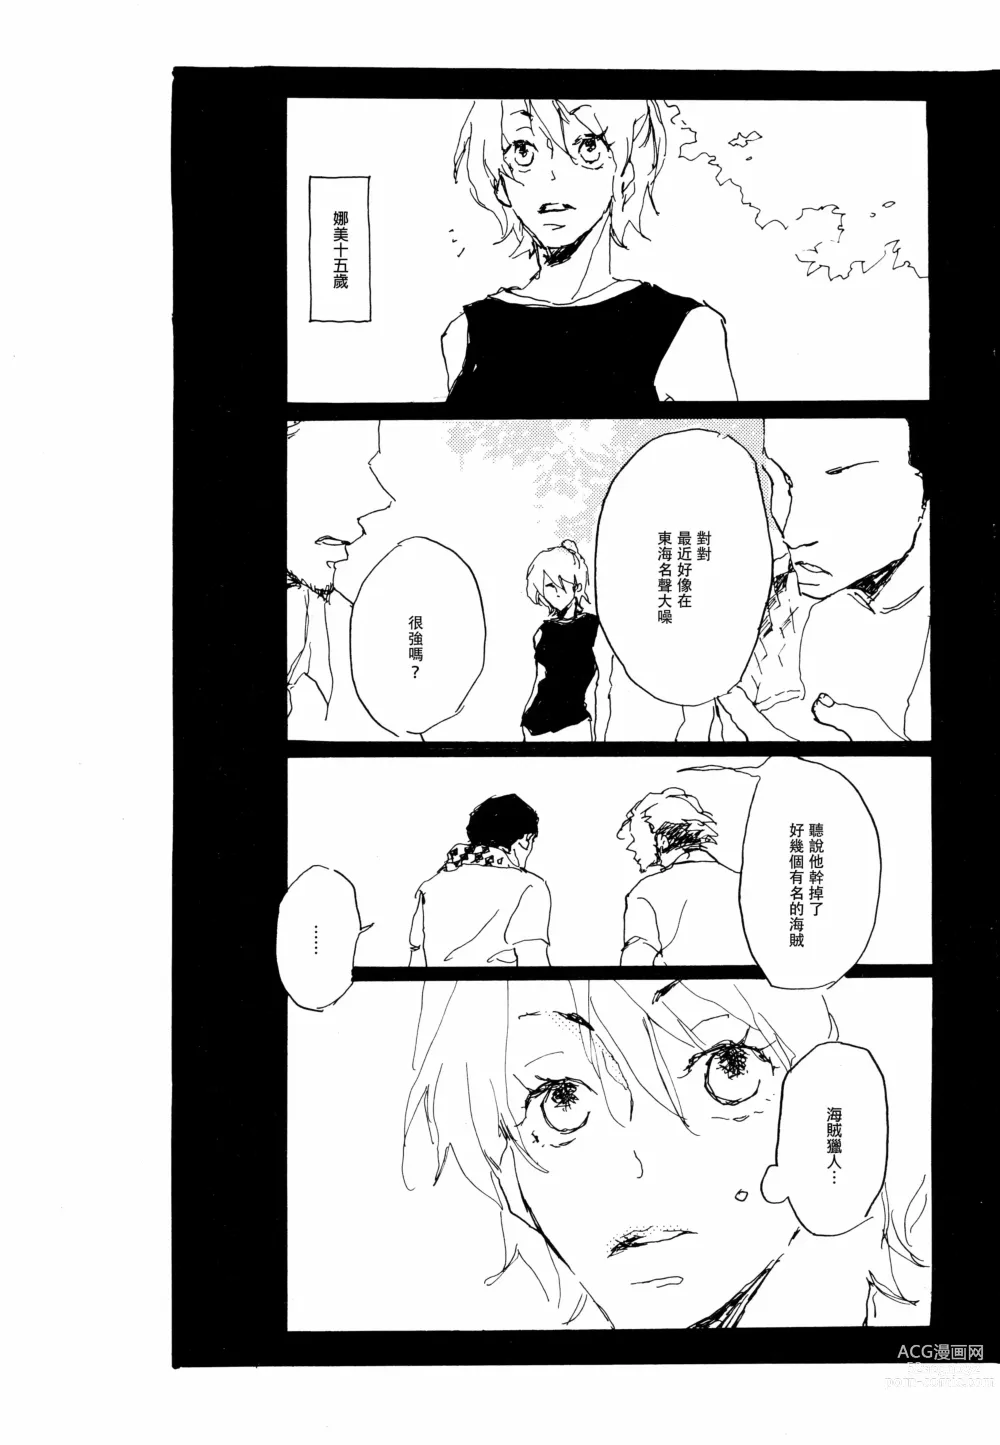 Page 4 of doujinshi 忧郁·与那份没有尽头的悲伤